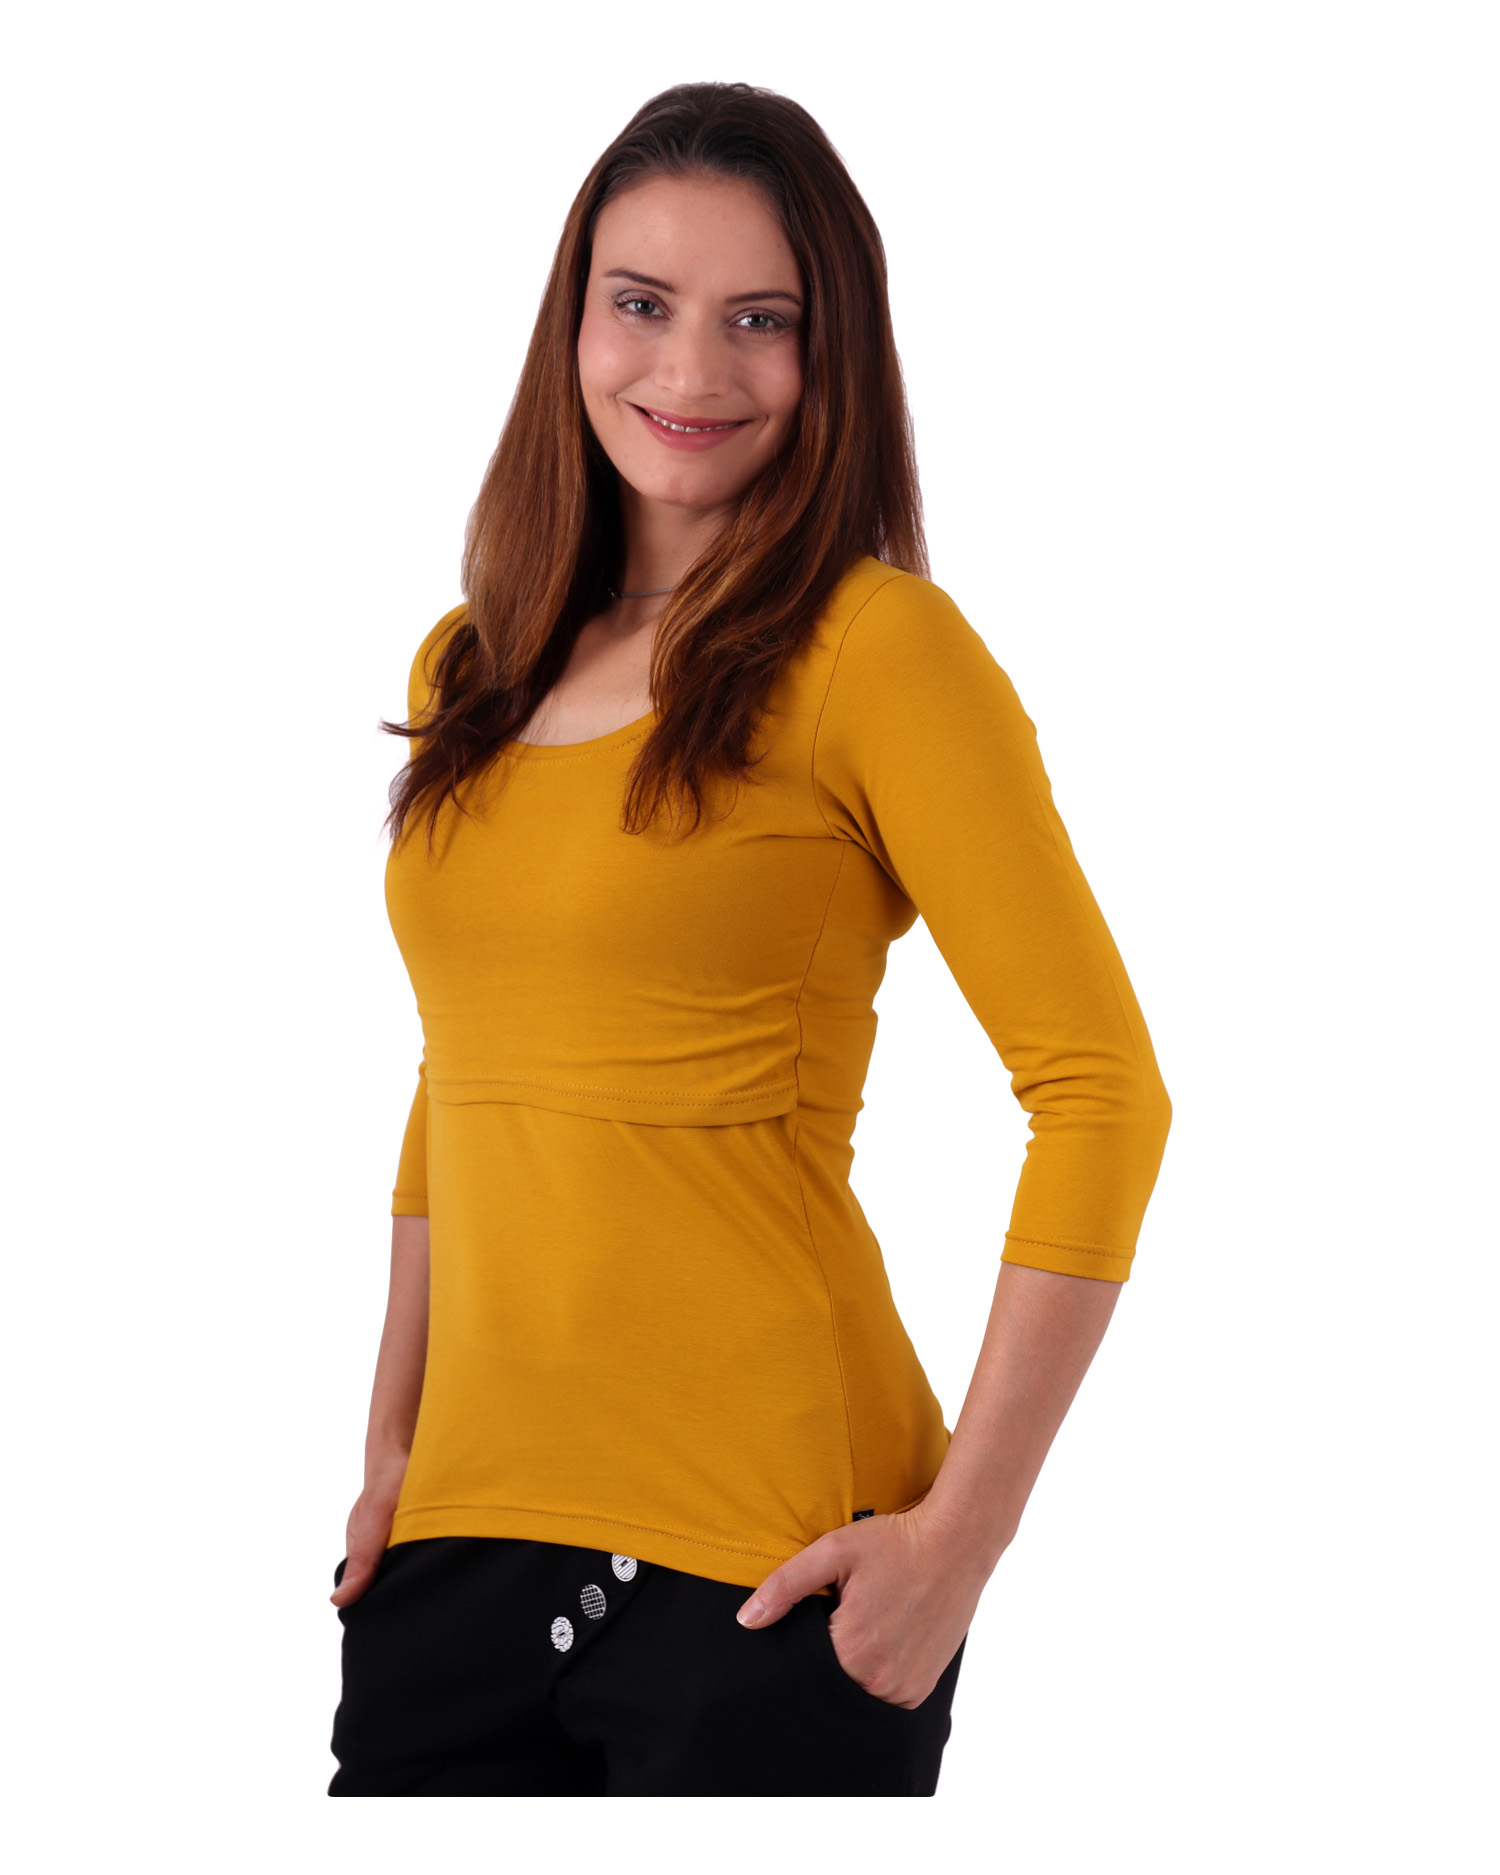 Breast-feeding T-shirt Katerina, 3/4 sleeves, mustard